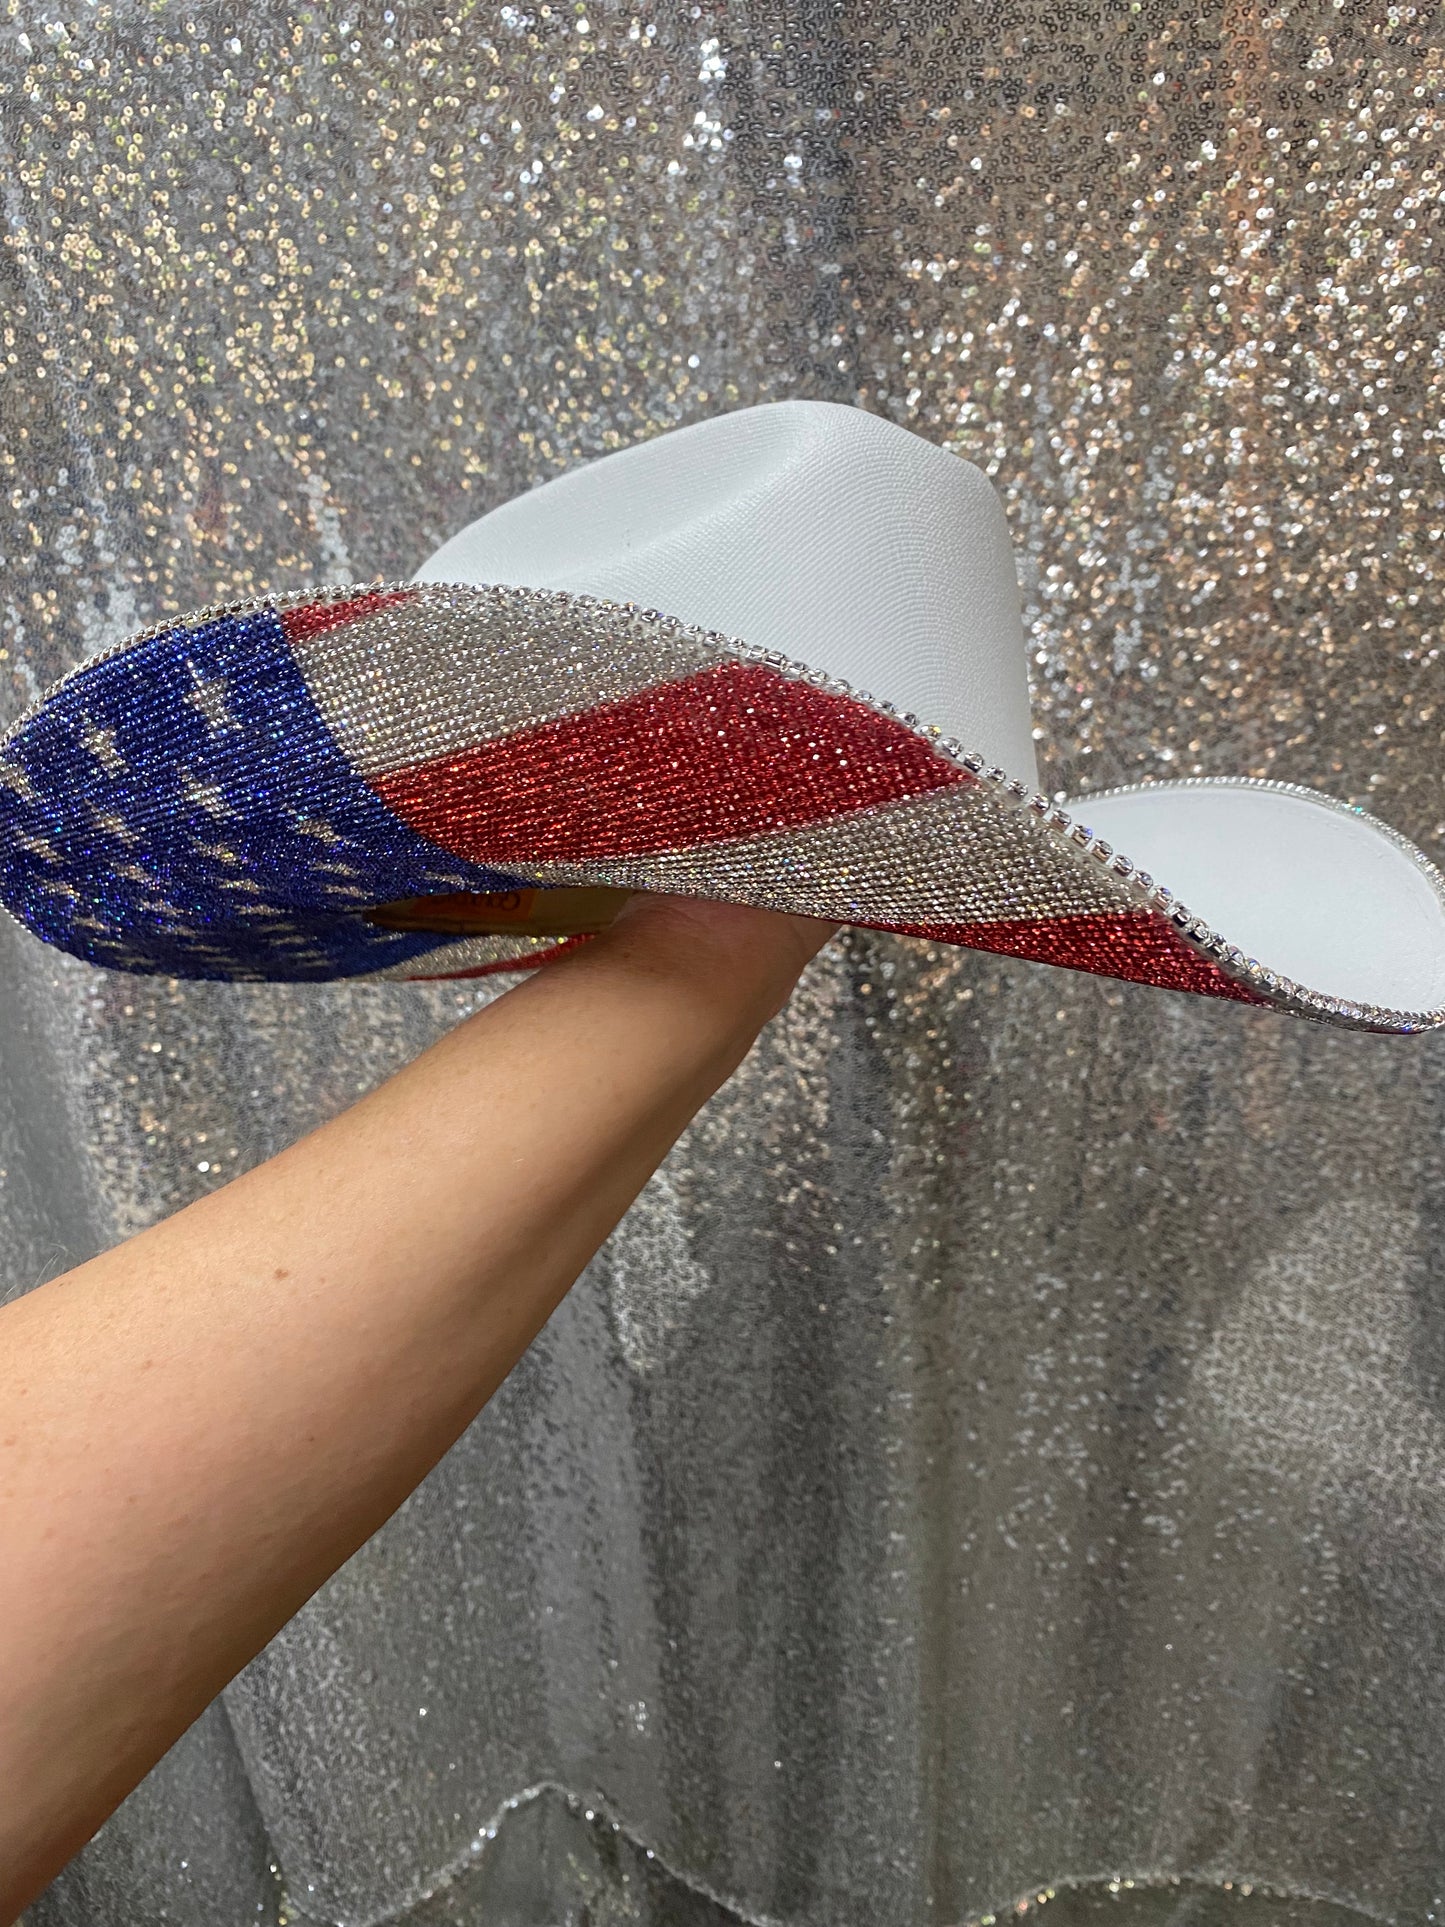 The "America" Hat